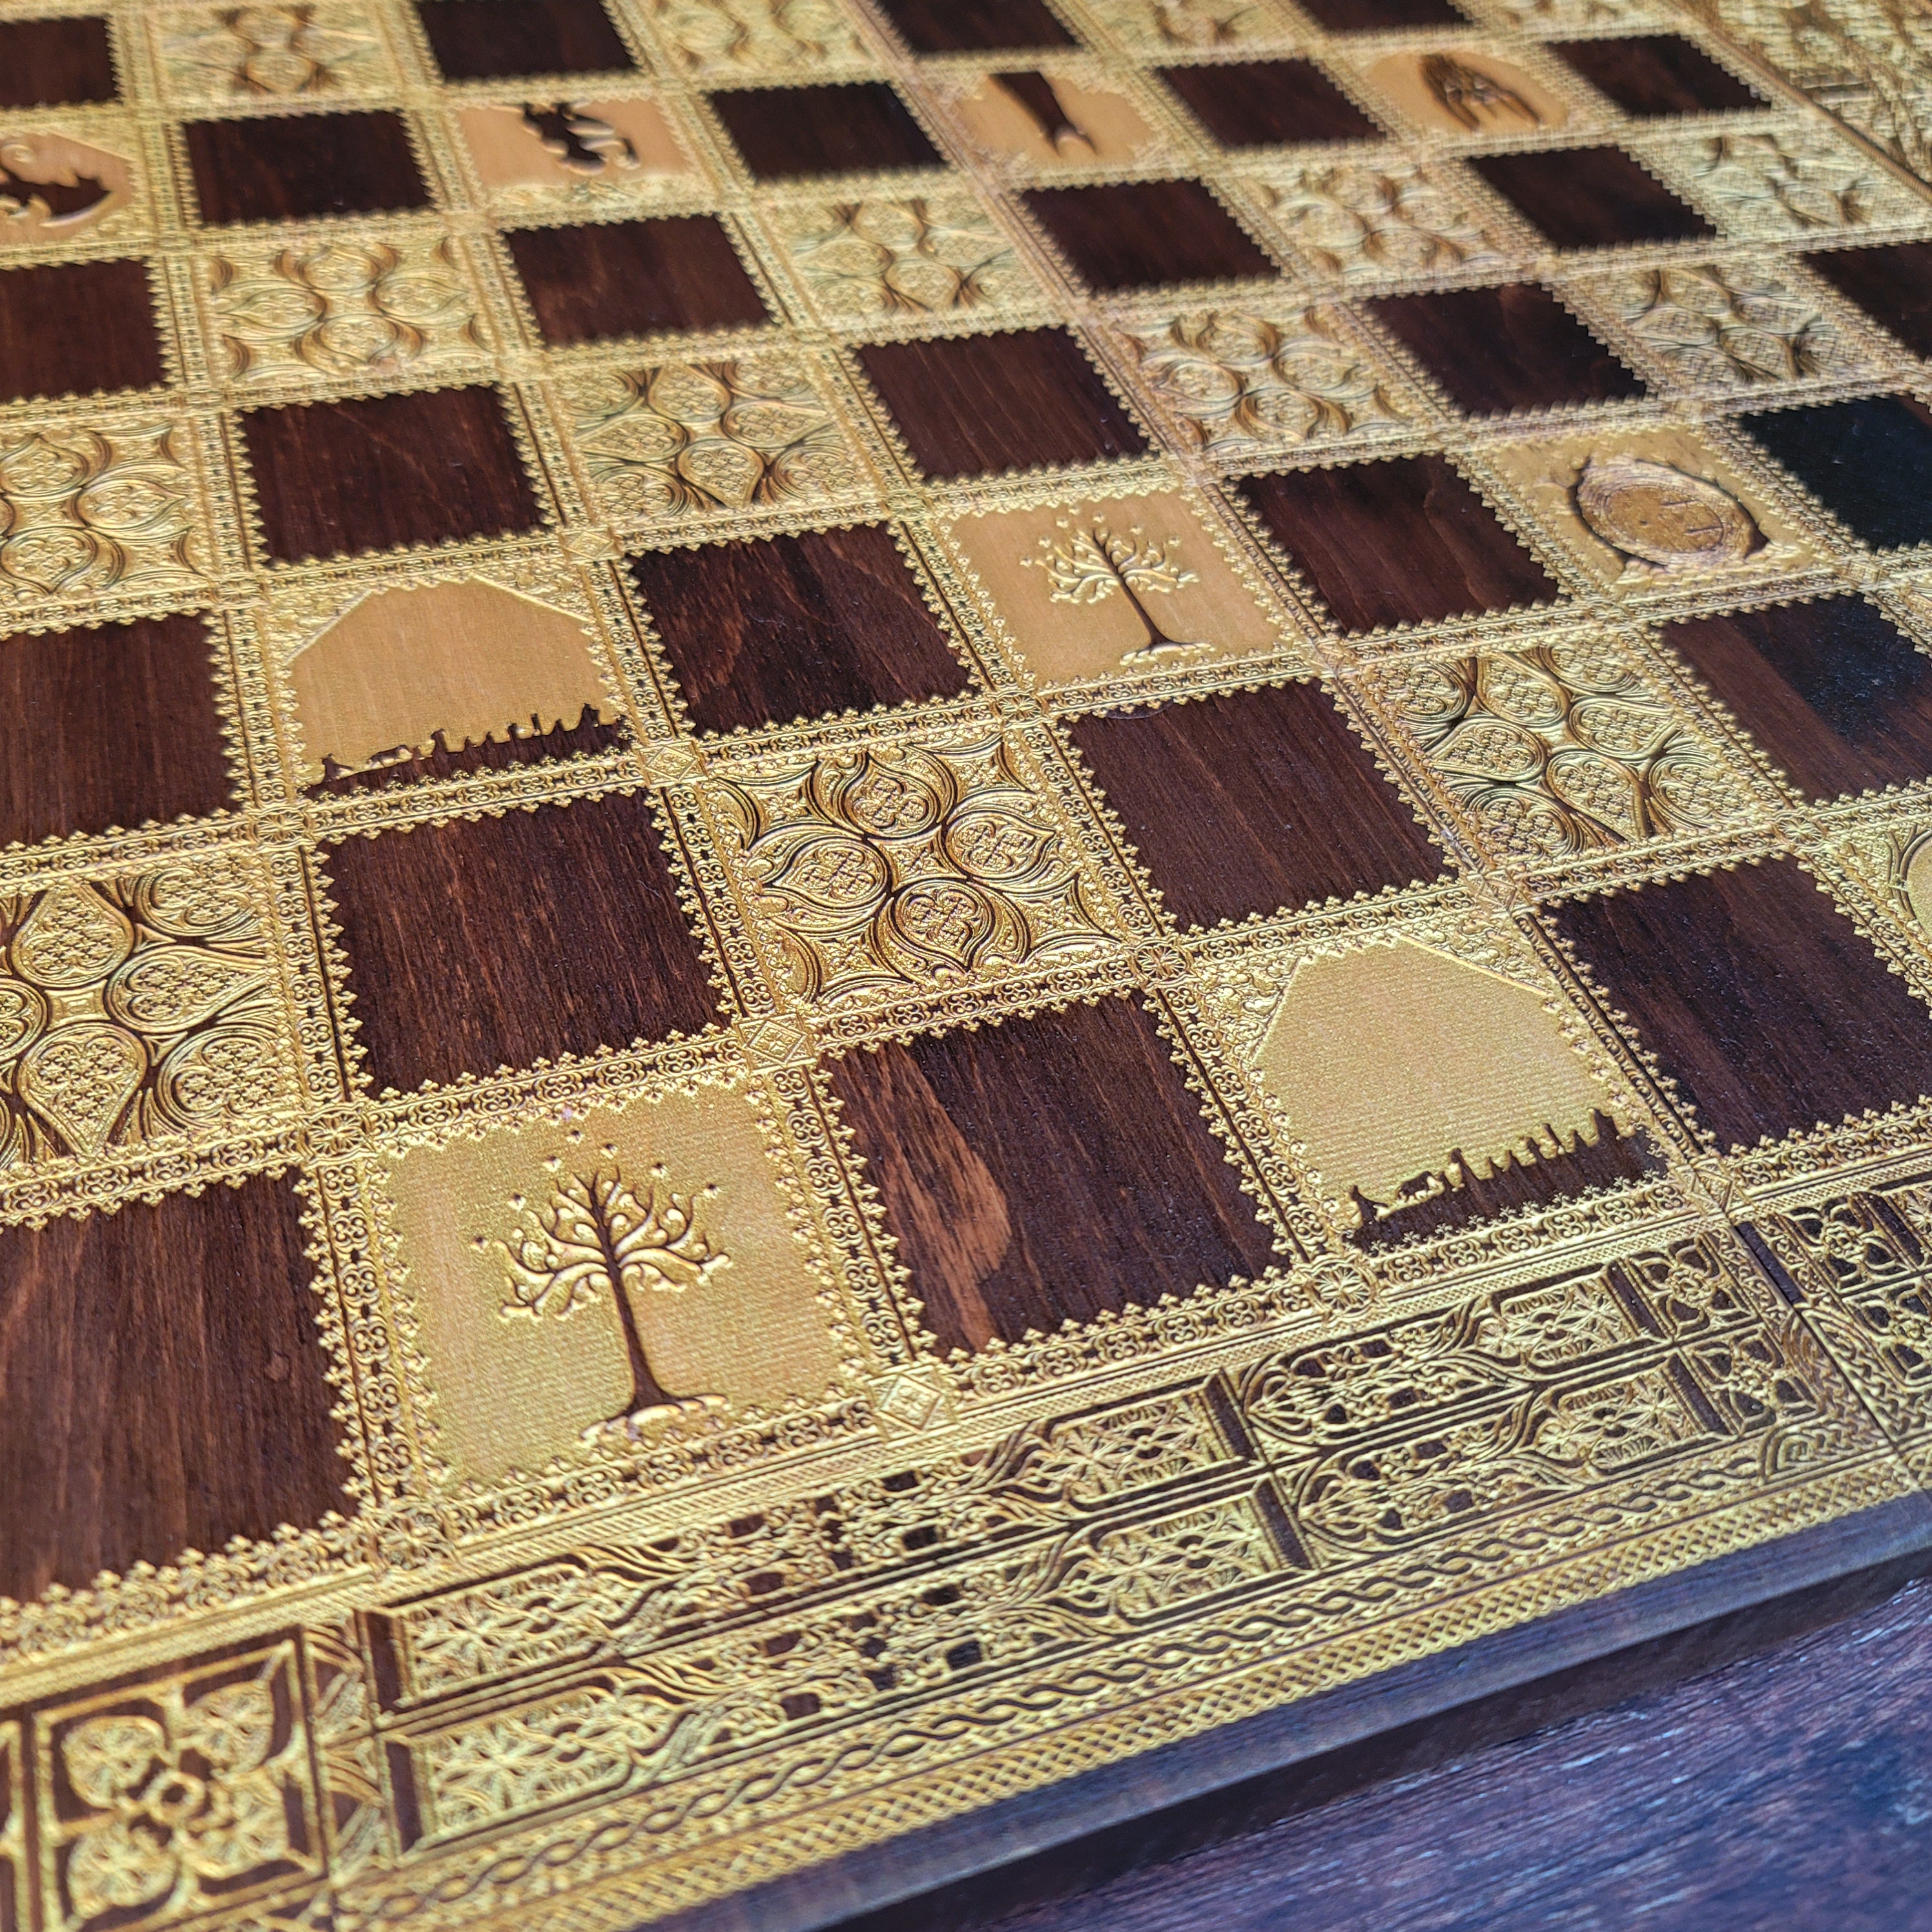 Fantasy Chess Board - Walnut & Gold - Tournament Size